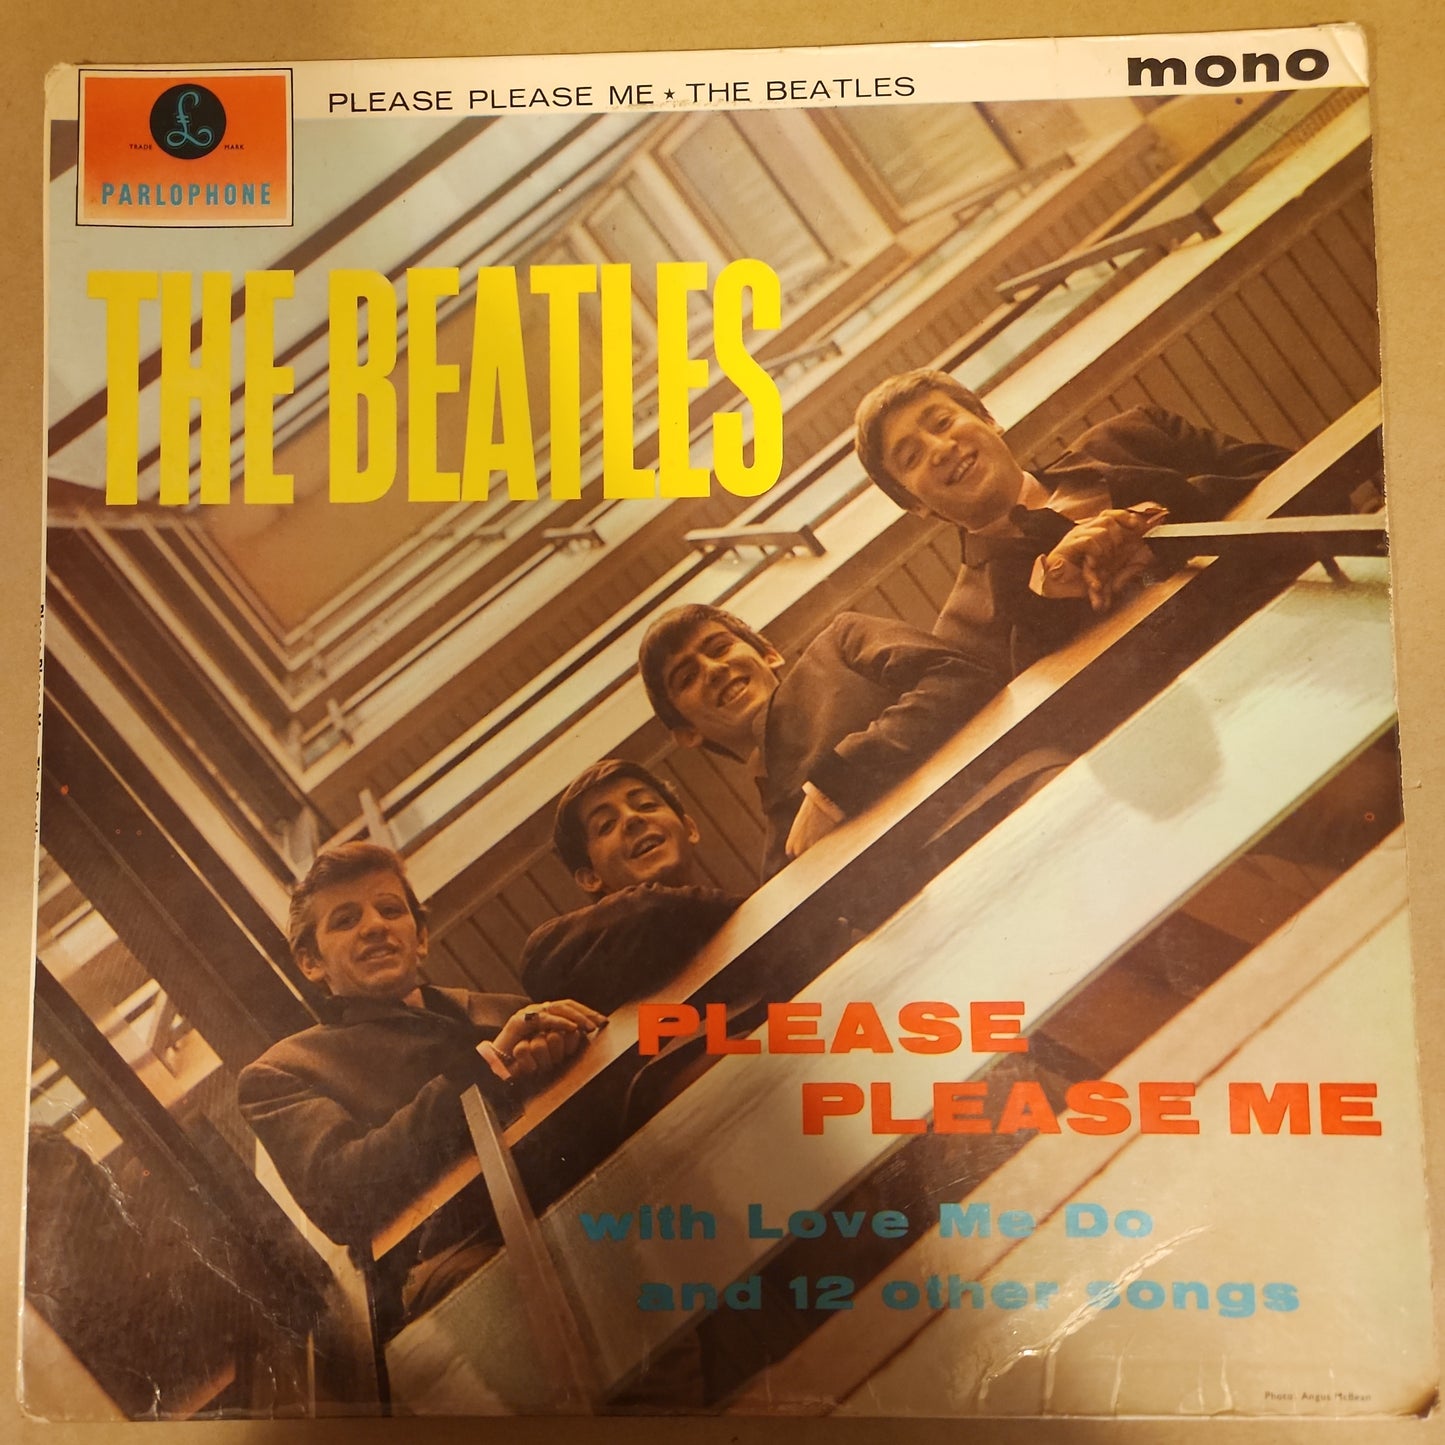 The Beatles - Please Please Me (997)